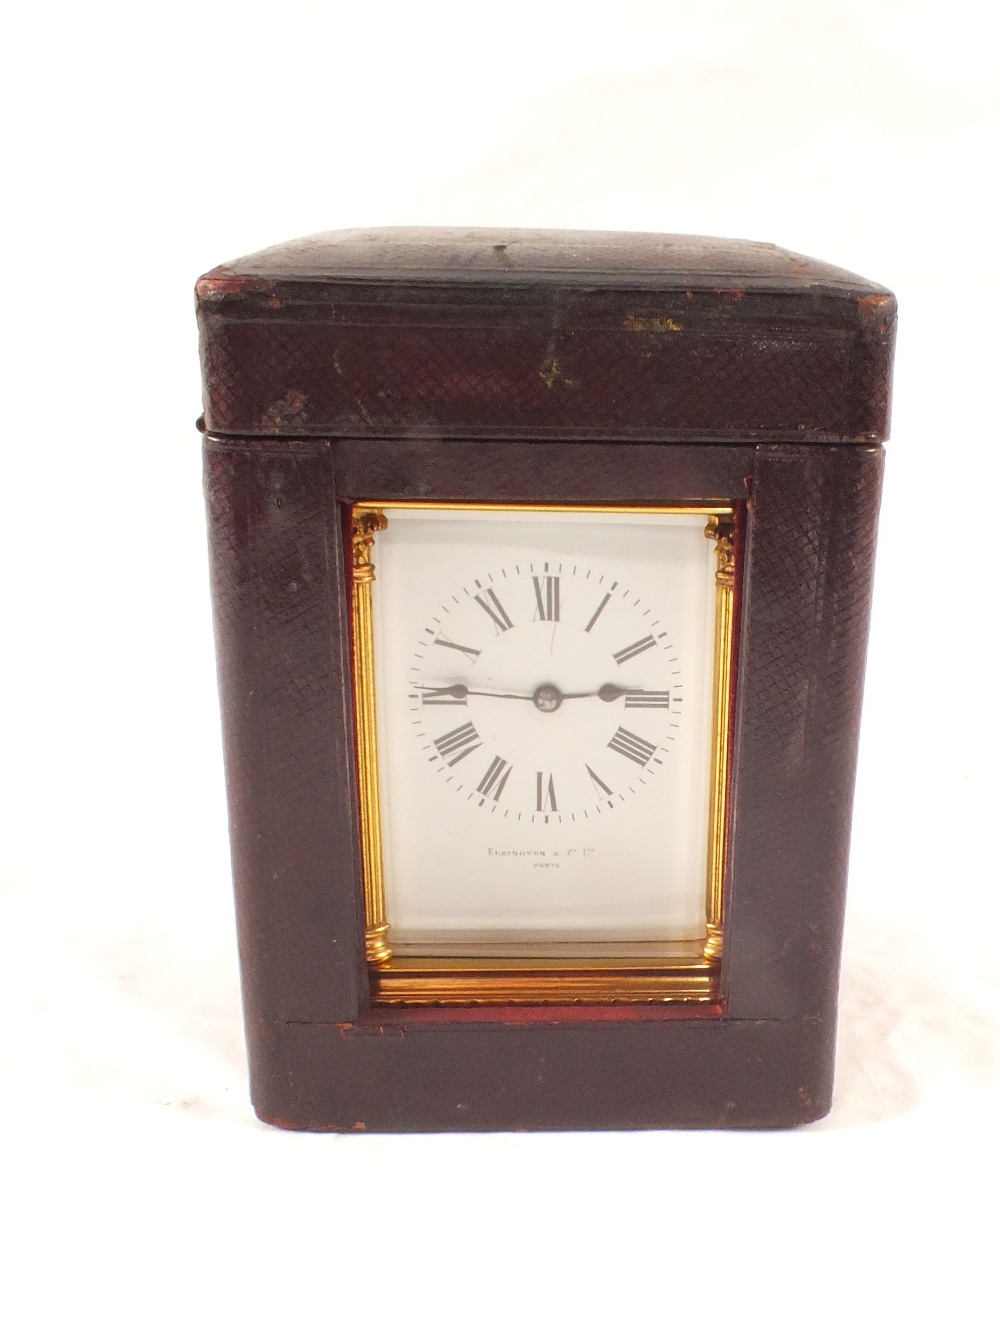 A brass carriage clock in case, dial marked Elkington & Co Ltd,